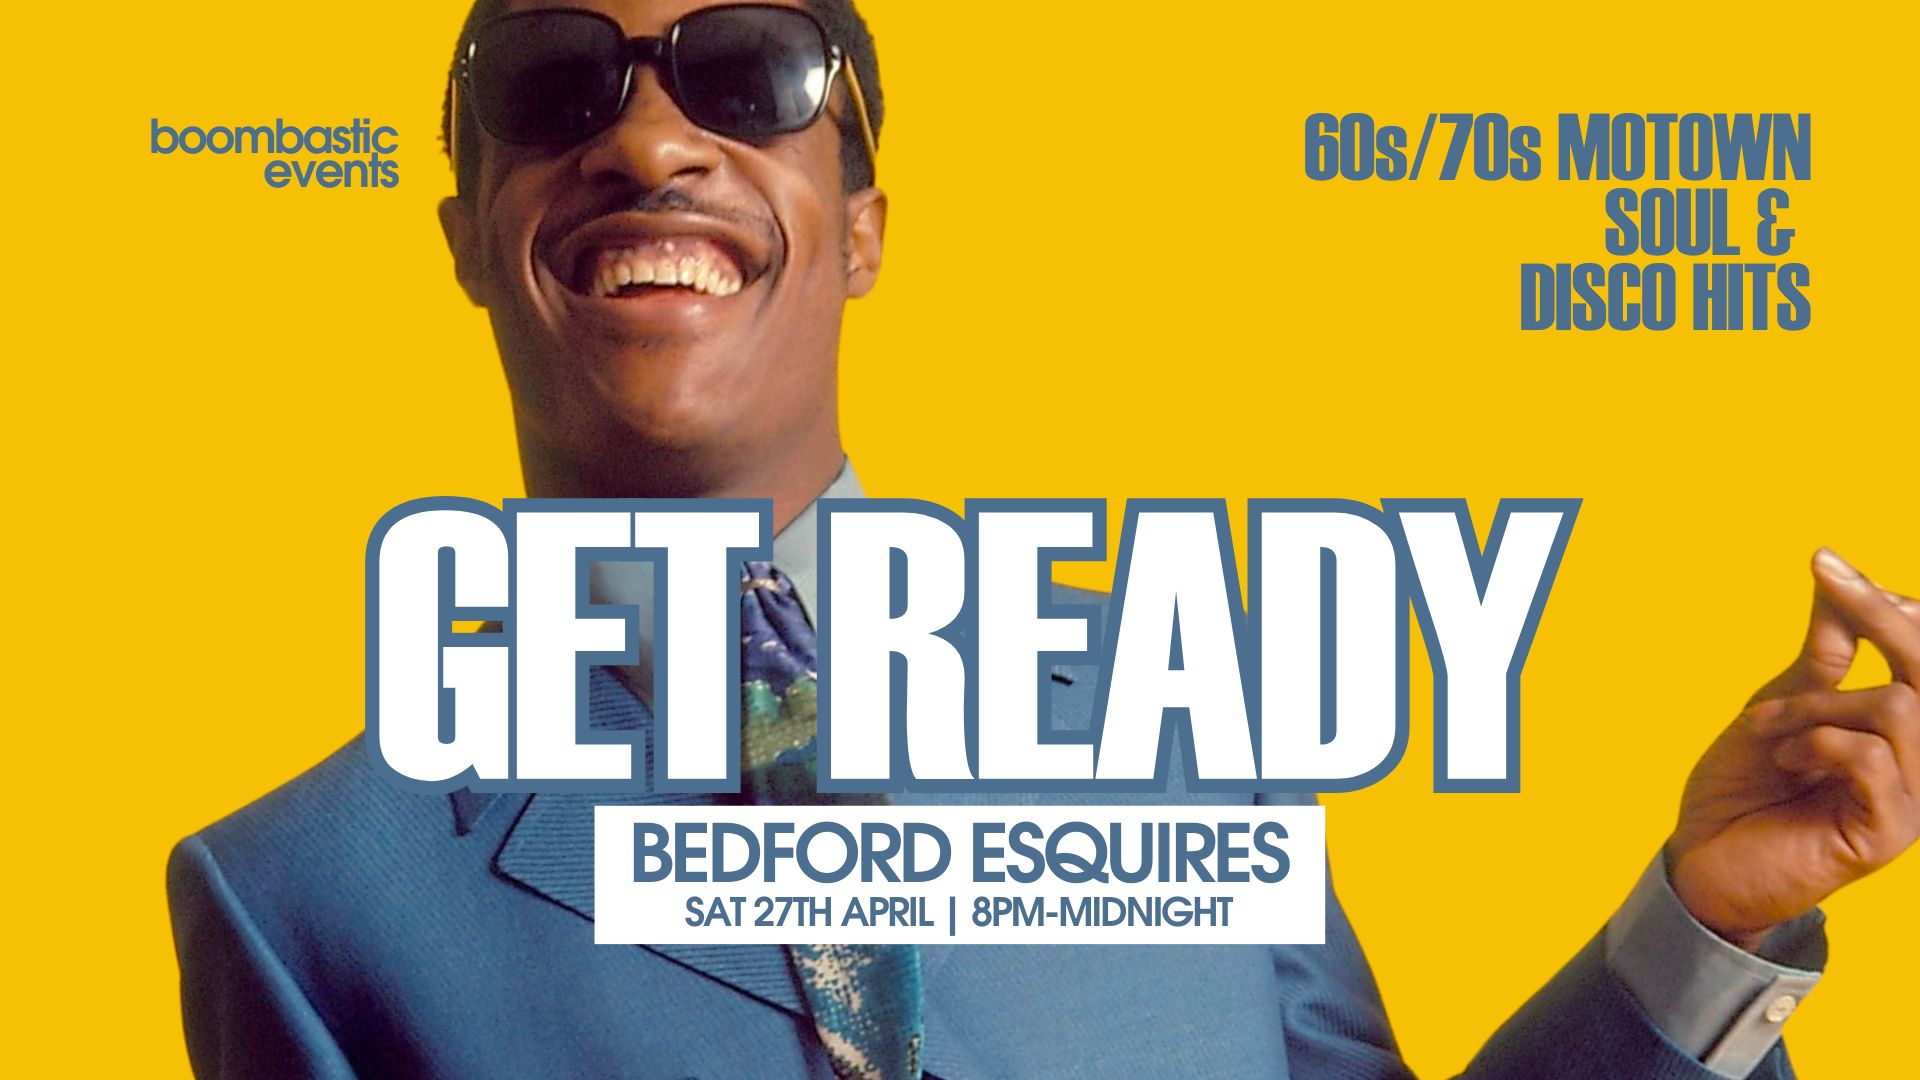 GET READY - 60s/70s Motown, Soul & Disco Night Bedford